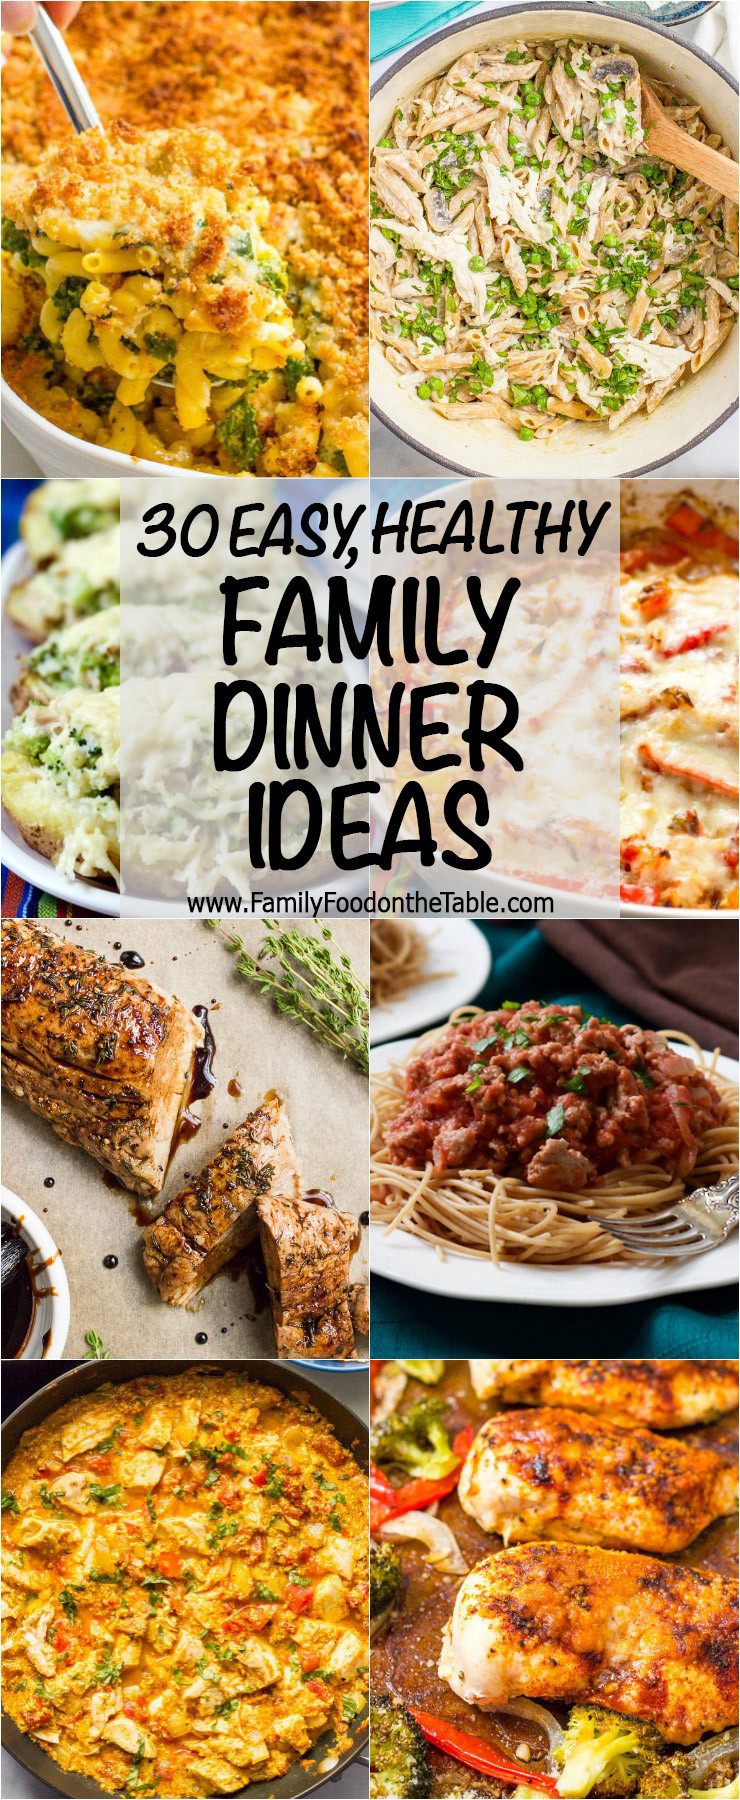 Healthy Family Dinner Recipes
 30 easy healthy family dinner ideas Family Food on the Table